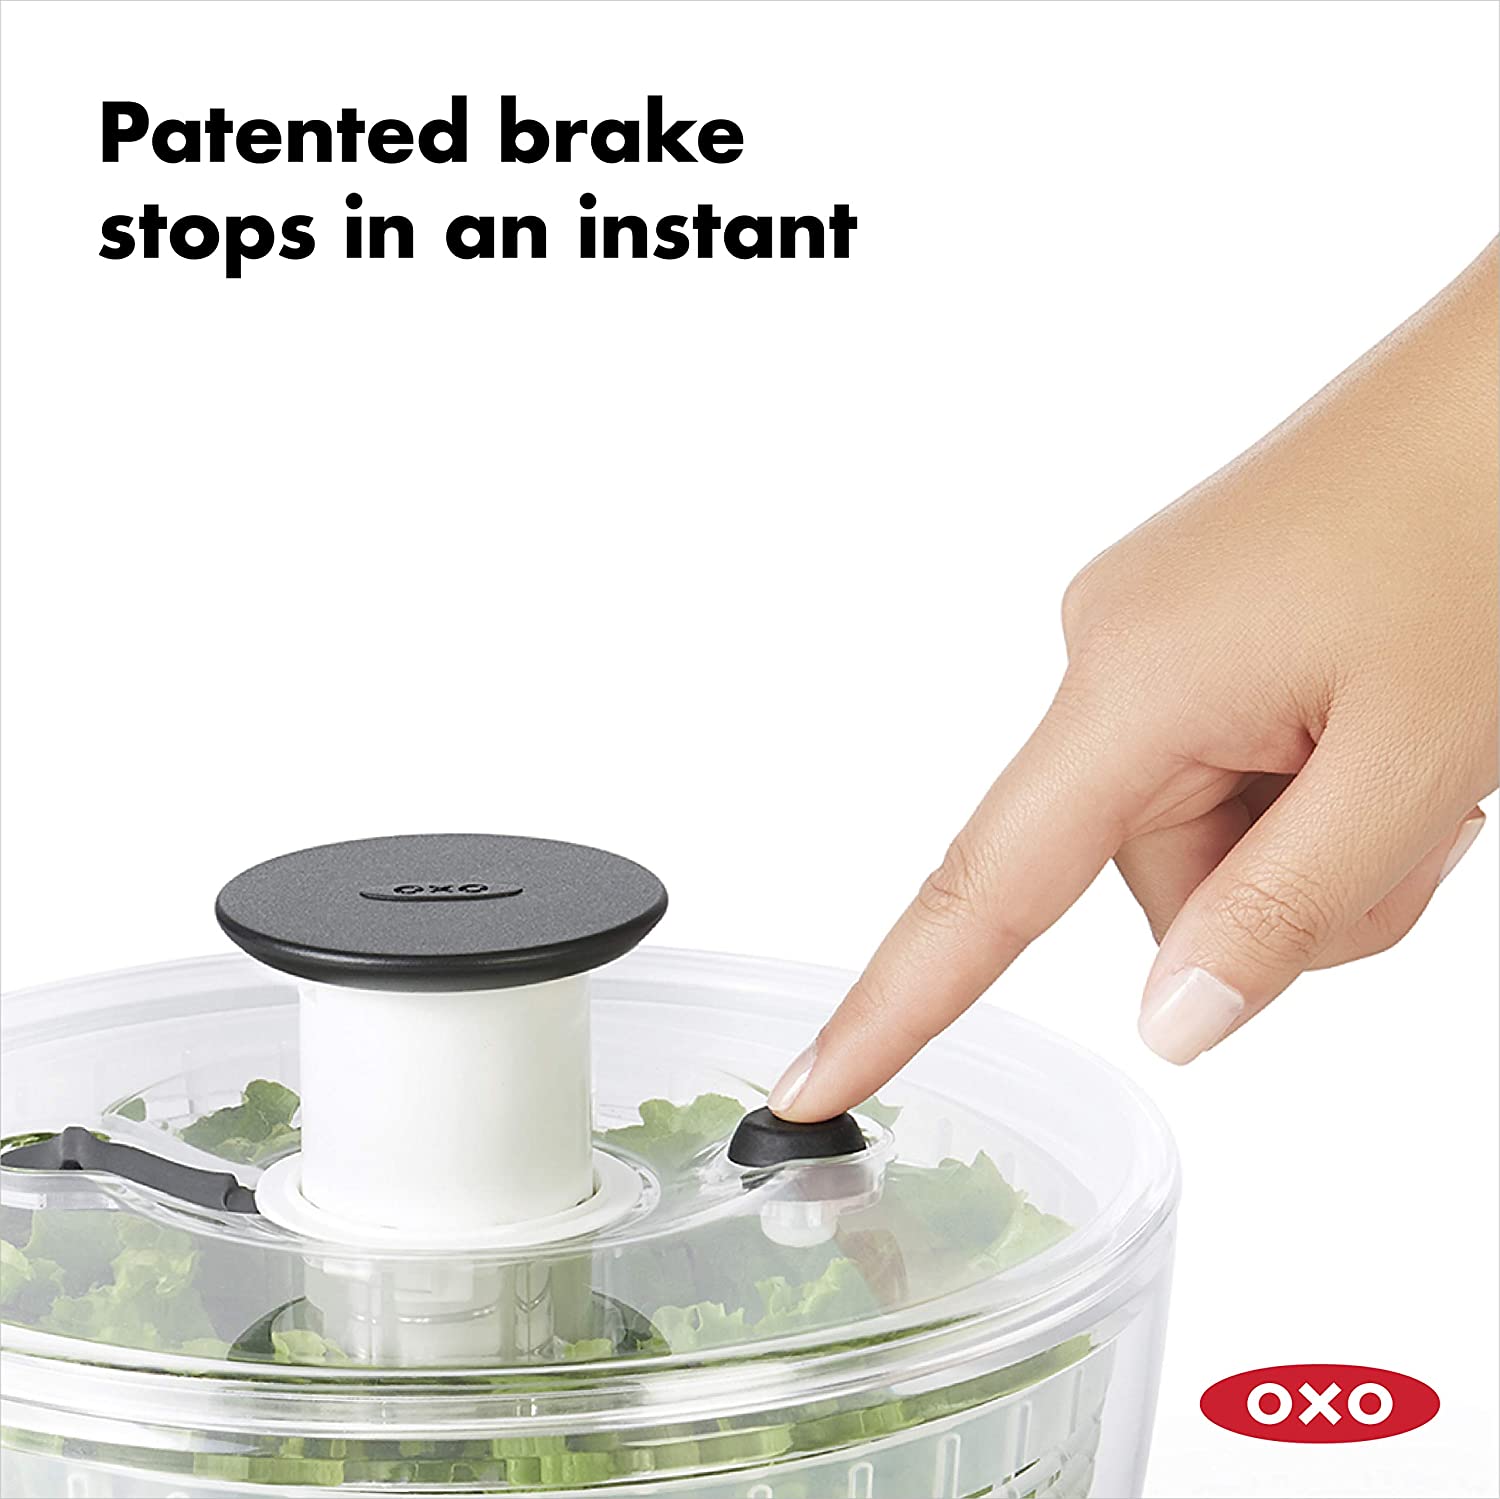  OXO Good Grips Glass Salad Spinner, Large/6.22 Quart